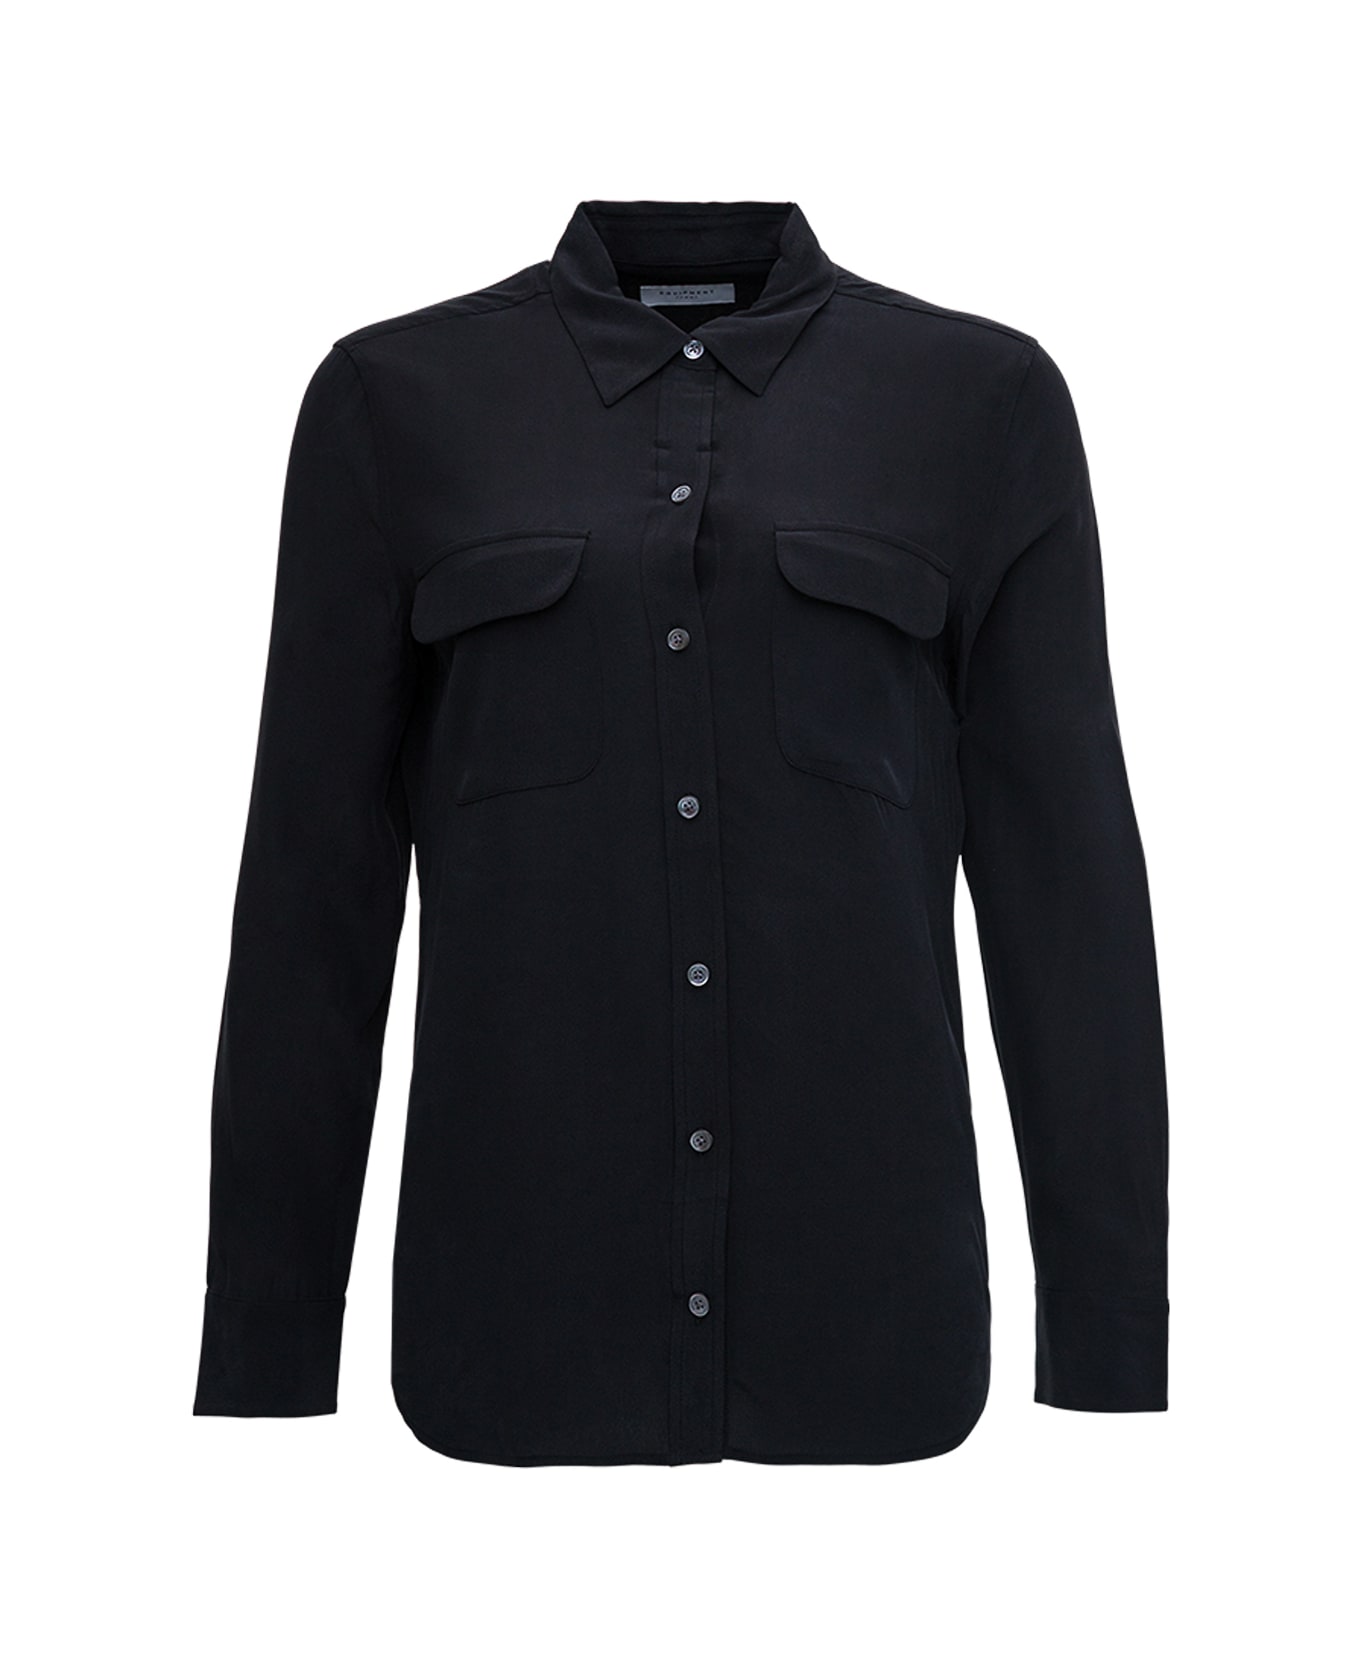 Equipment Black Silk Shirt With Pockets - Nero シャツ